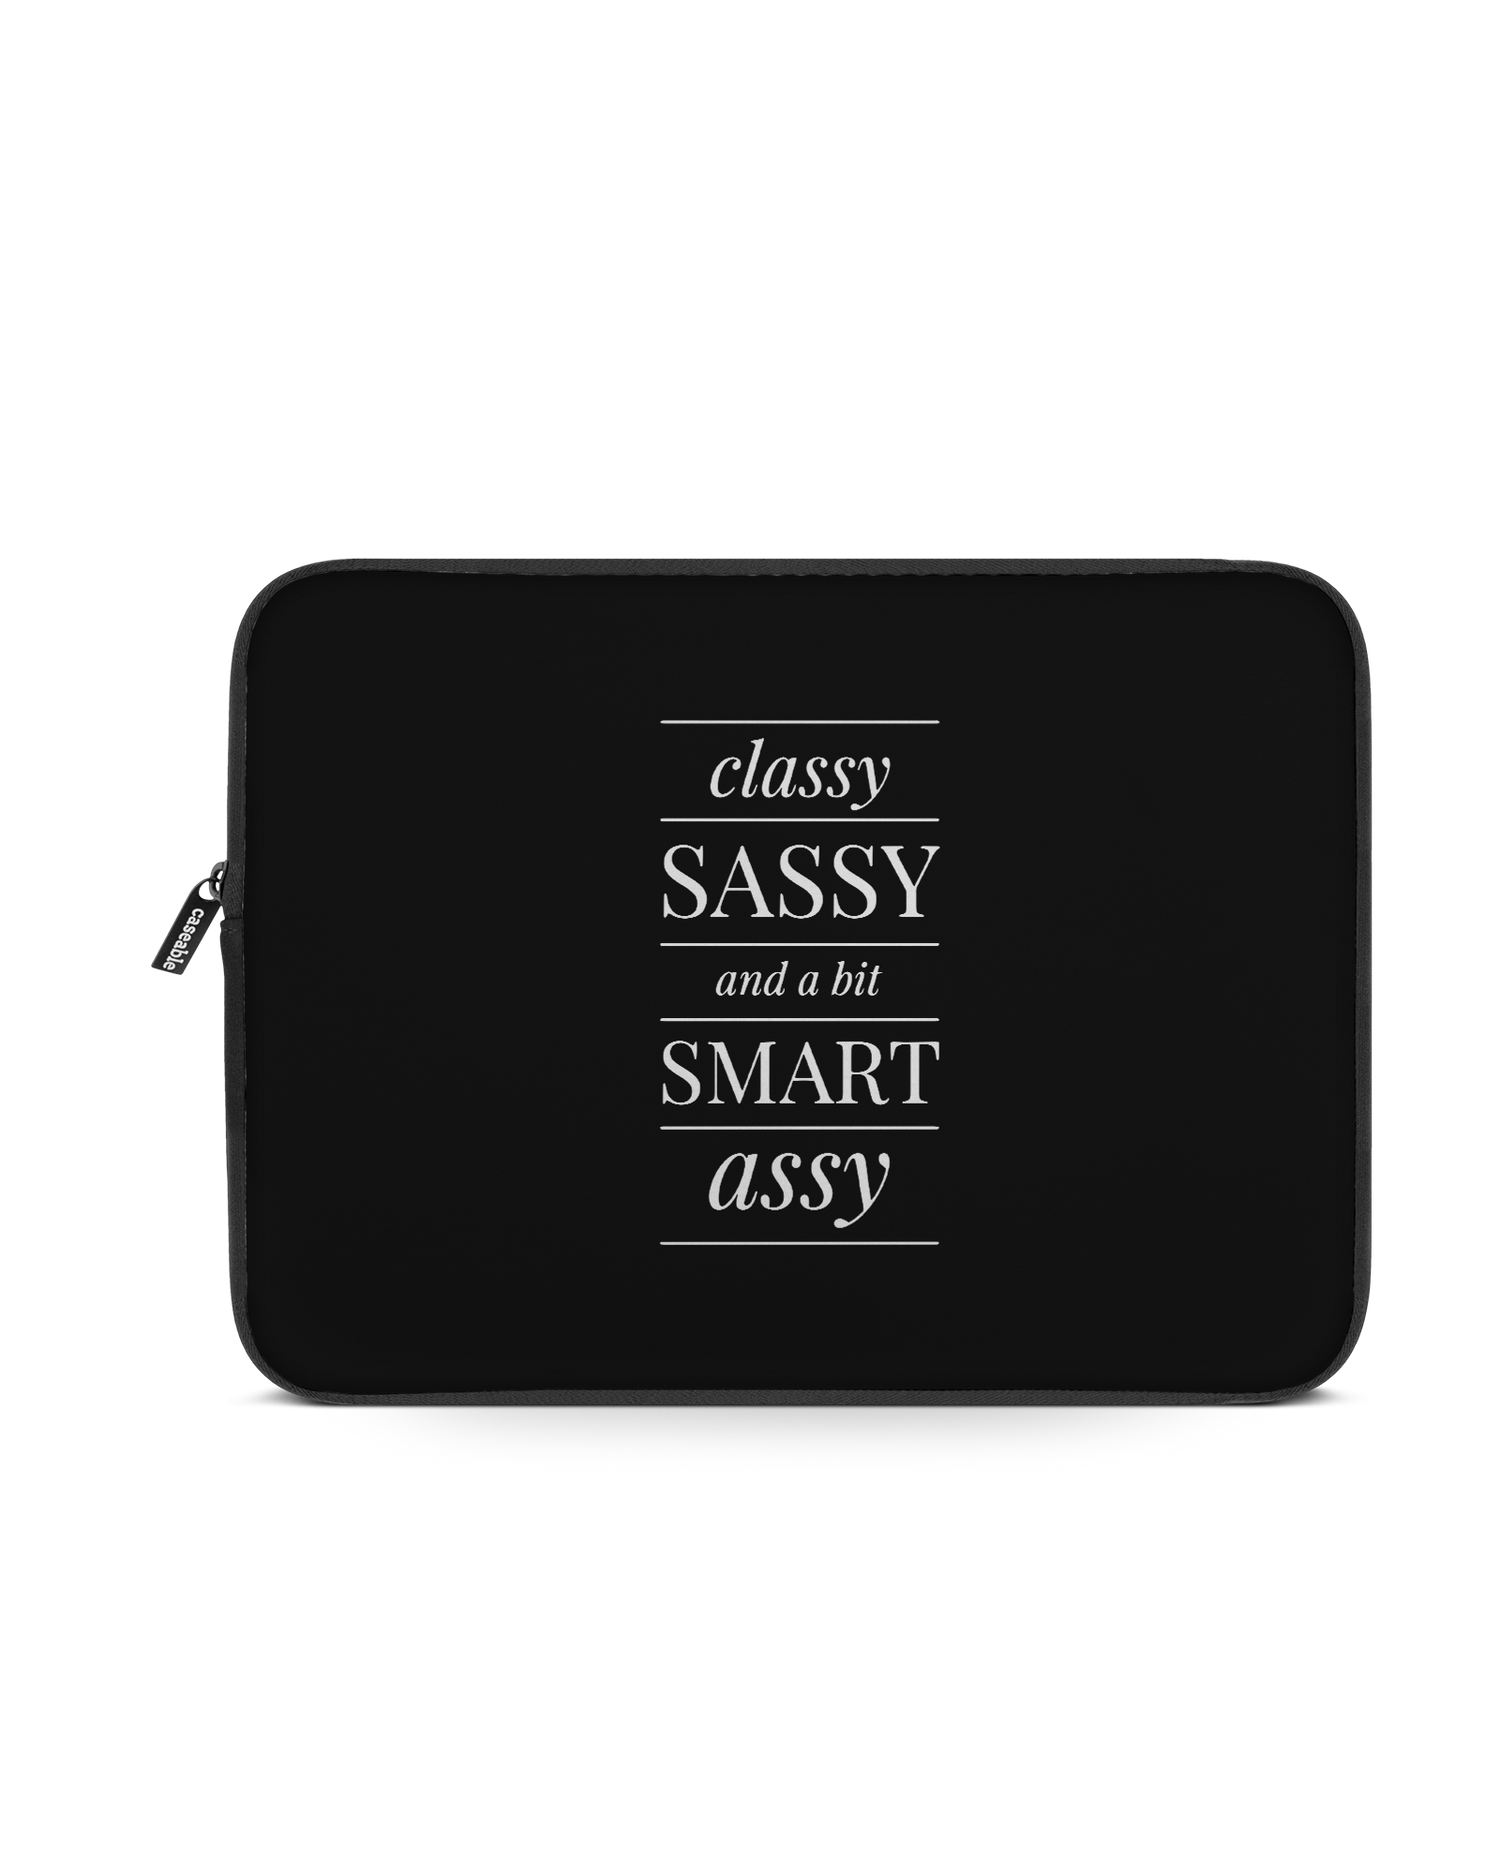 Classy Sassy Laptophülle 13 Zoll: Vorderansicht